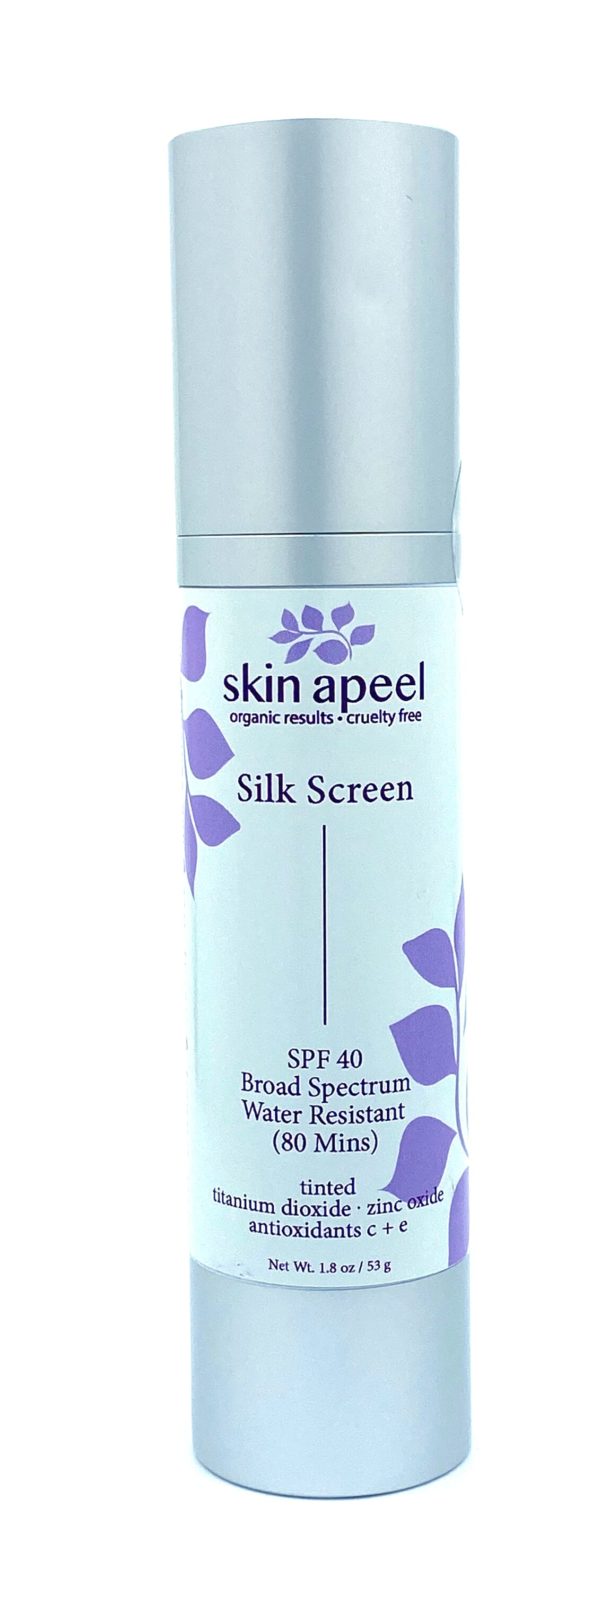 Silk Screen by Skin Apeel